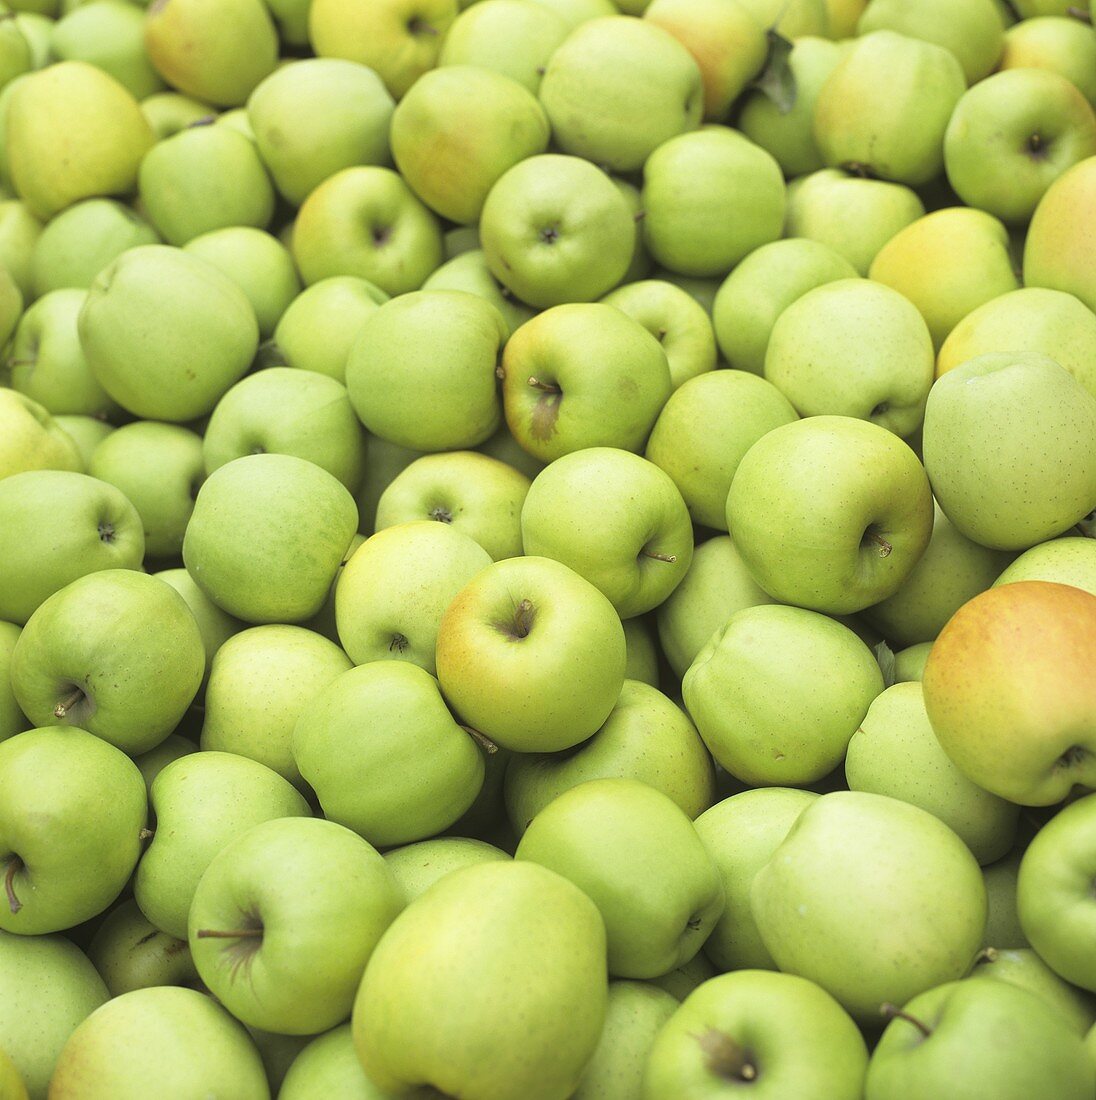 Viele grüne Äpfel (bildfüllend)